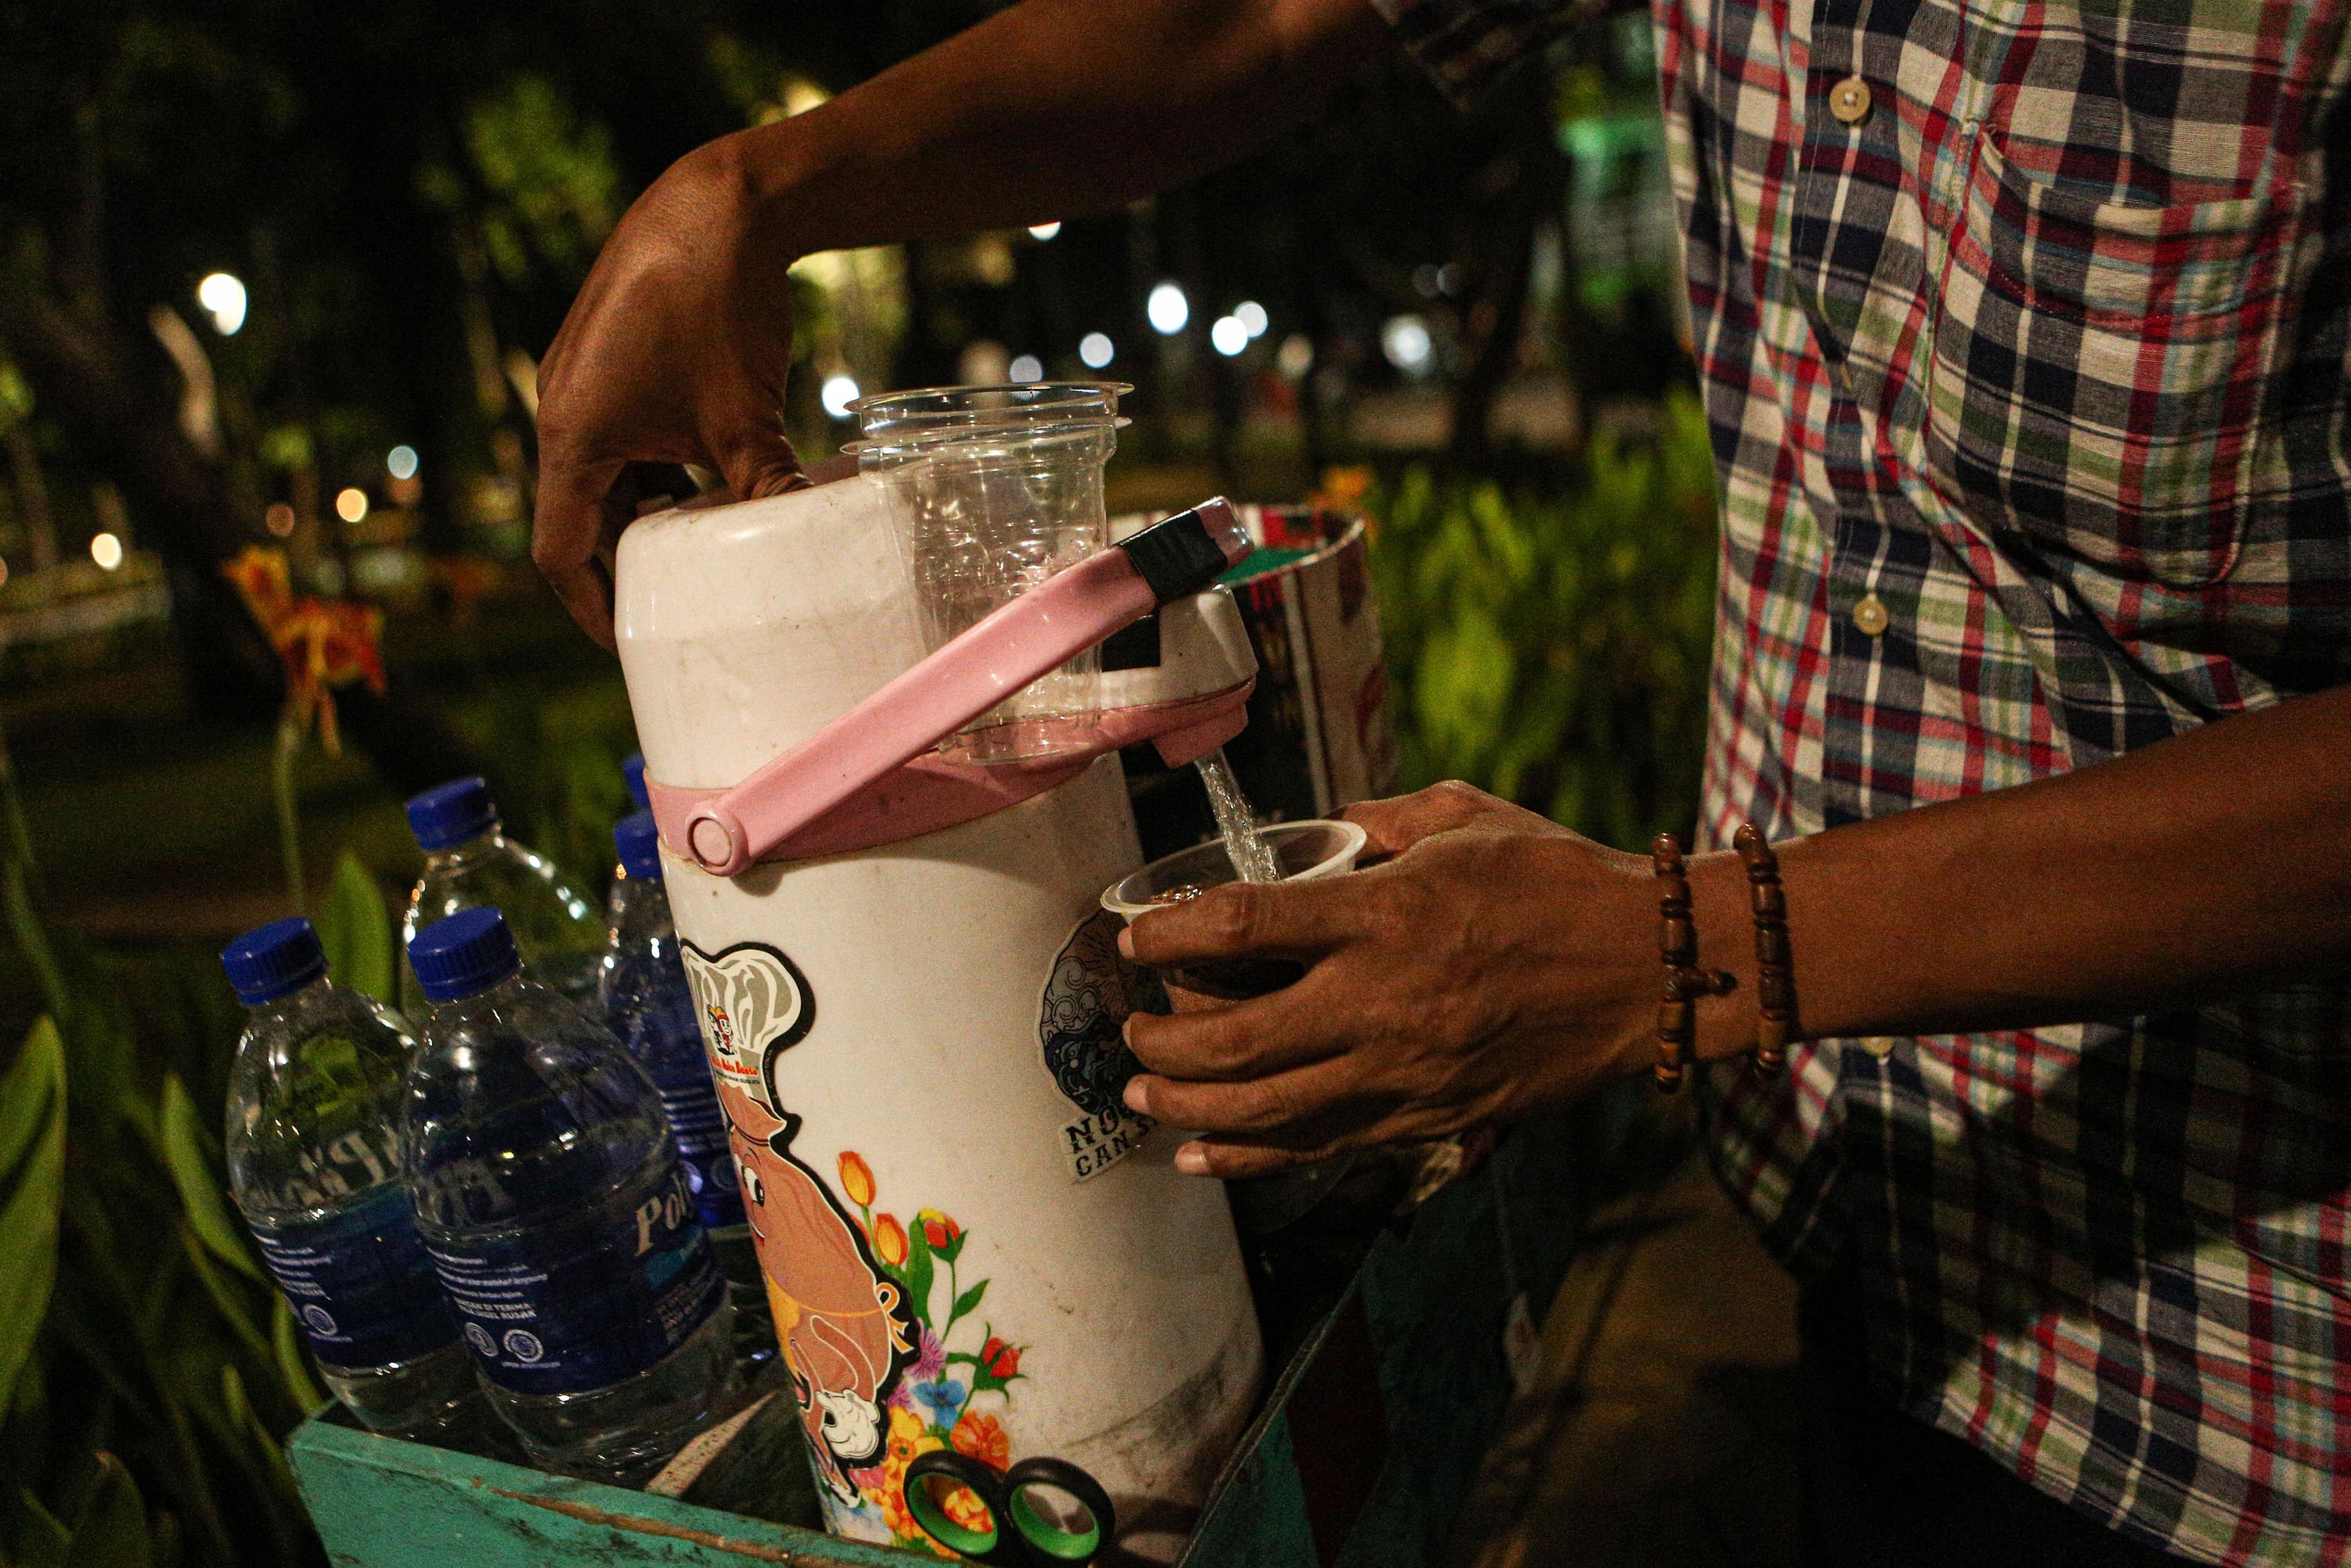 Hendra (30), menyiapkan kopi untuk pembeli di Kawasan Taman Menteng, Jakarta Pusat.